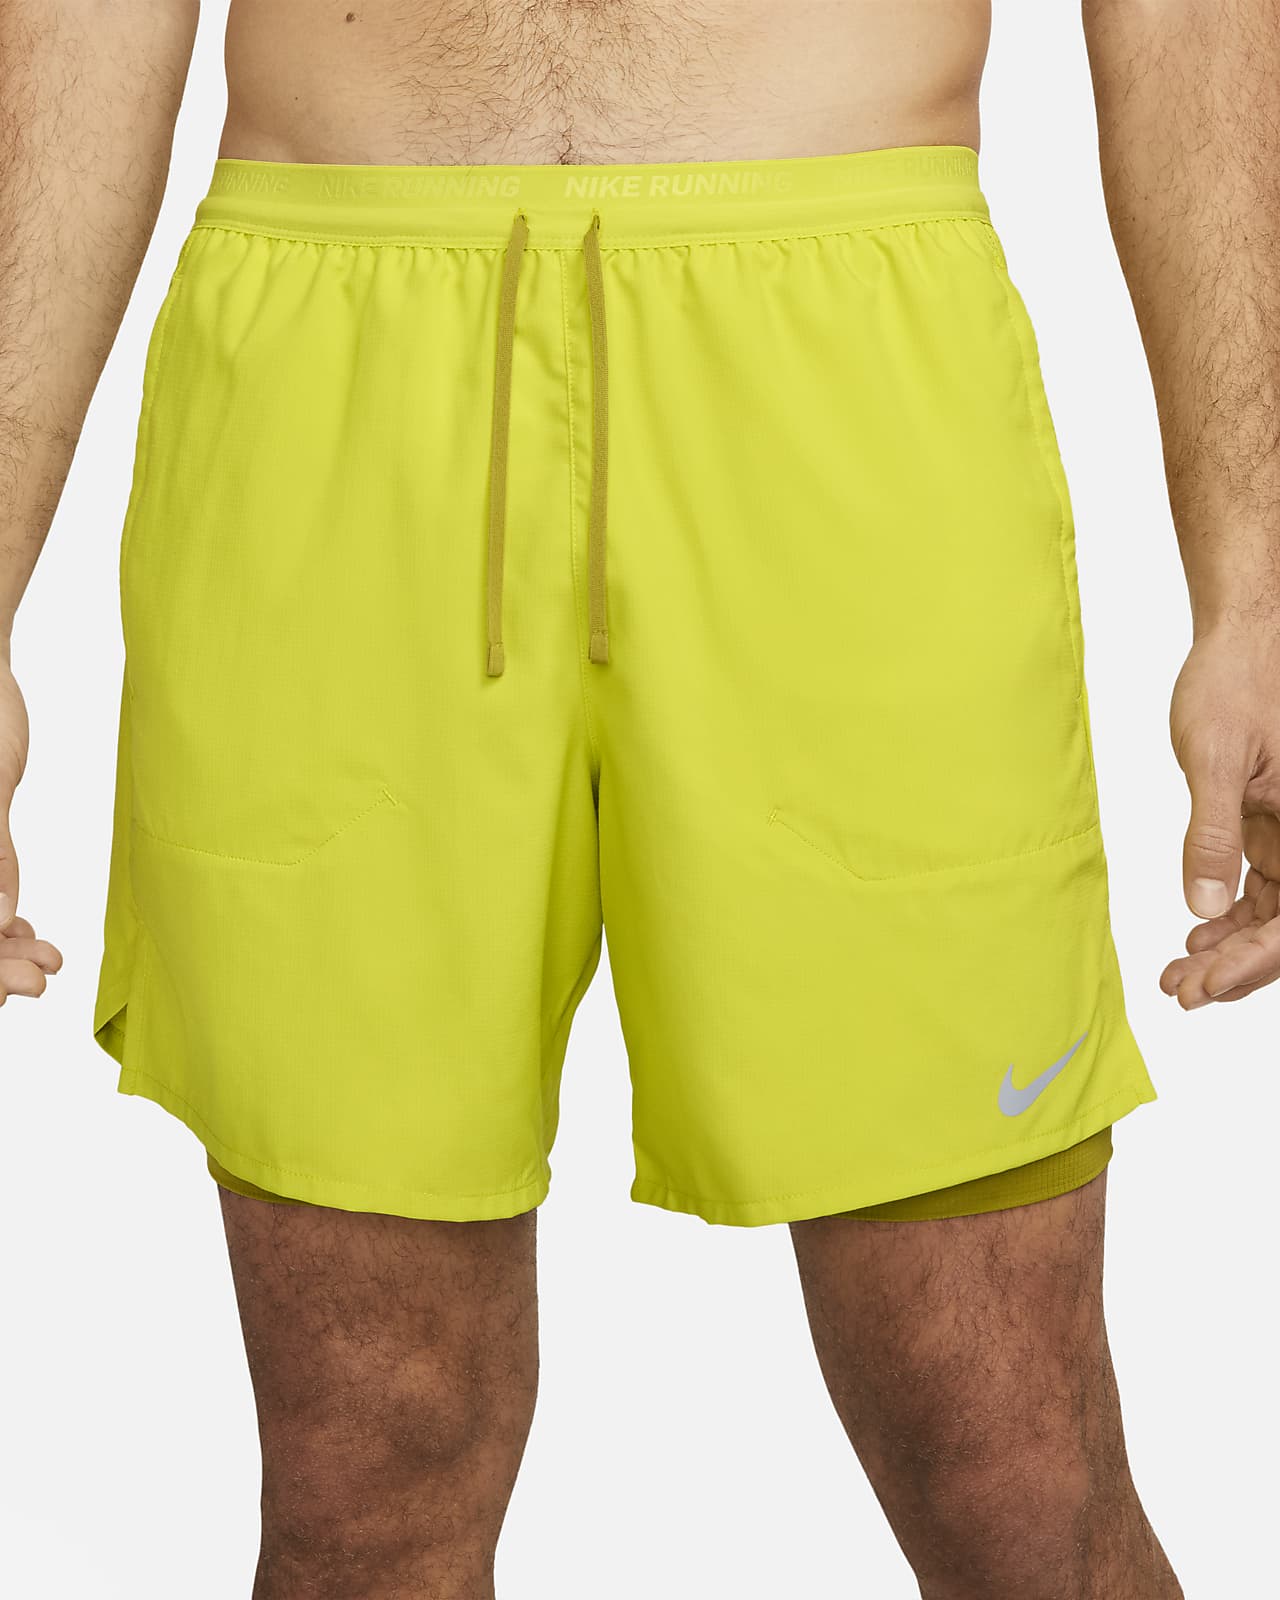 Nike Mens Running Shorts Size Guide | lupon.gov.ph